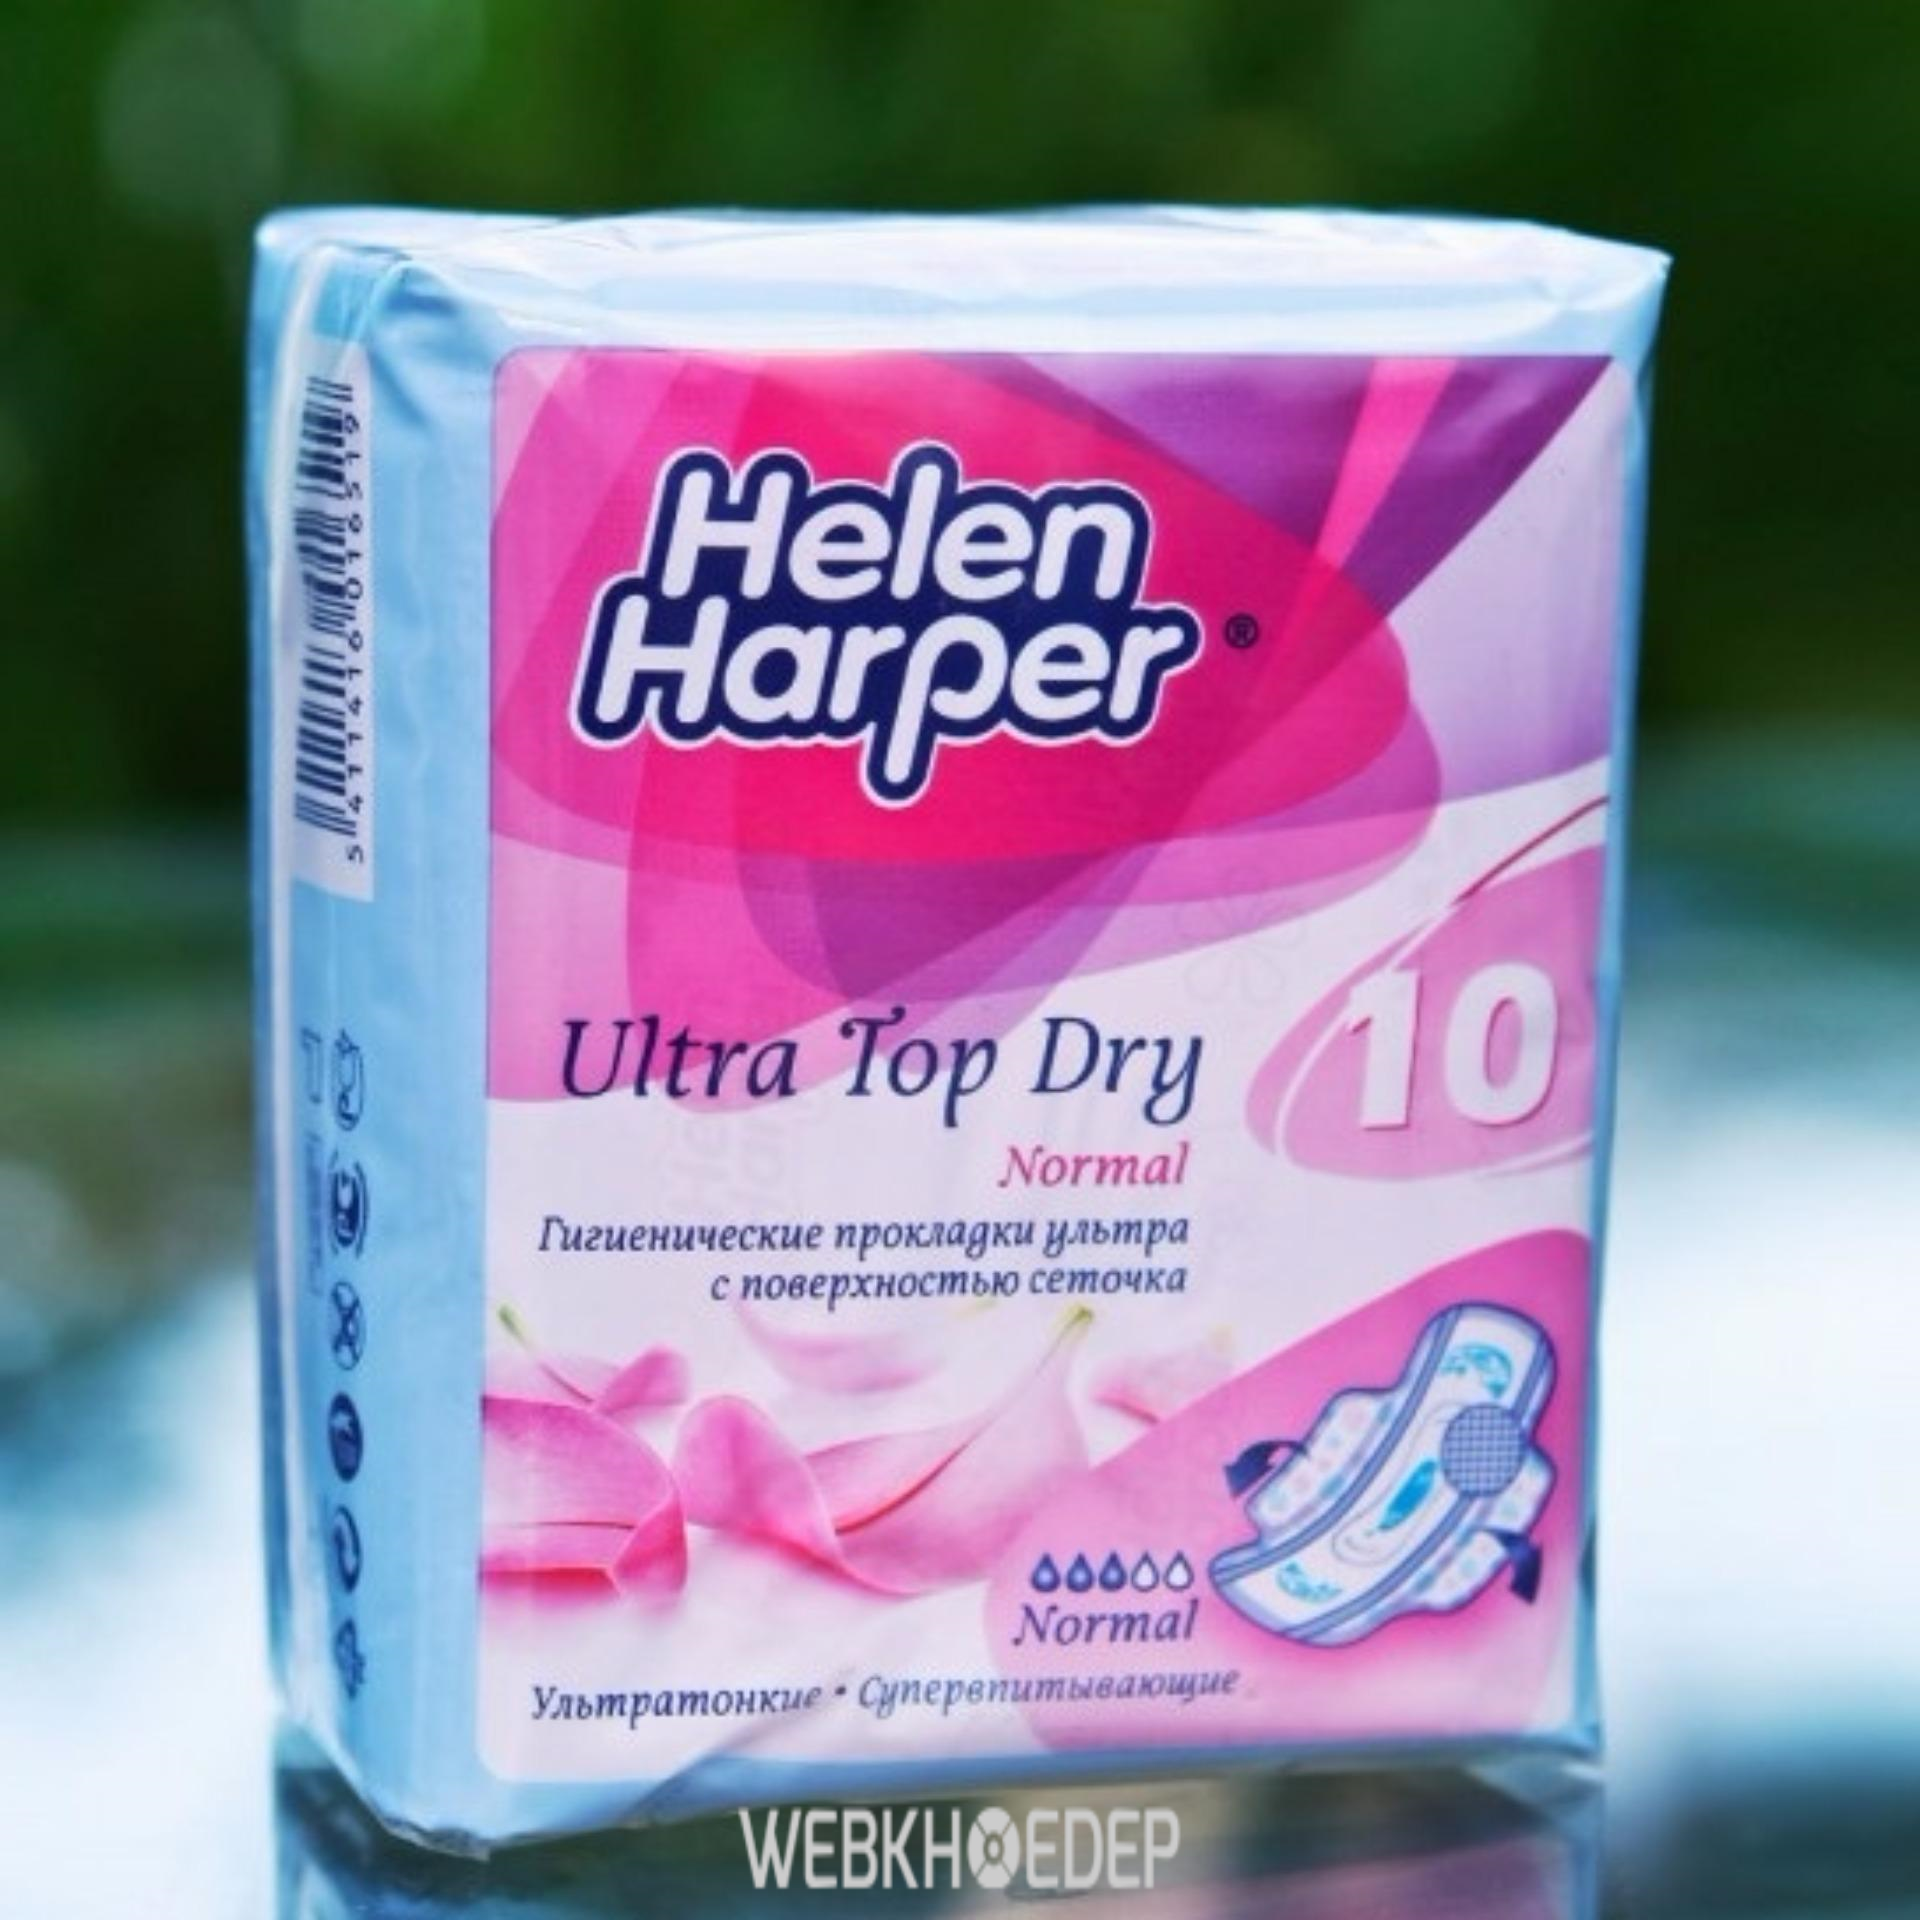 Băng vệ sinh Helen Harper